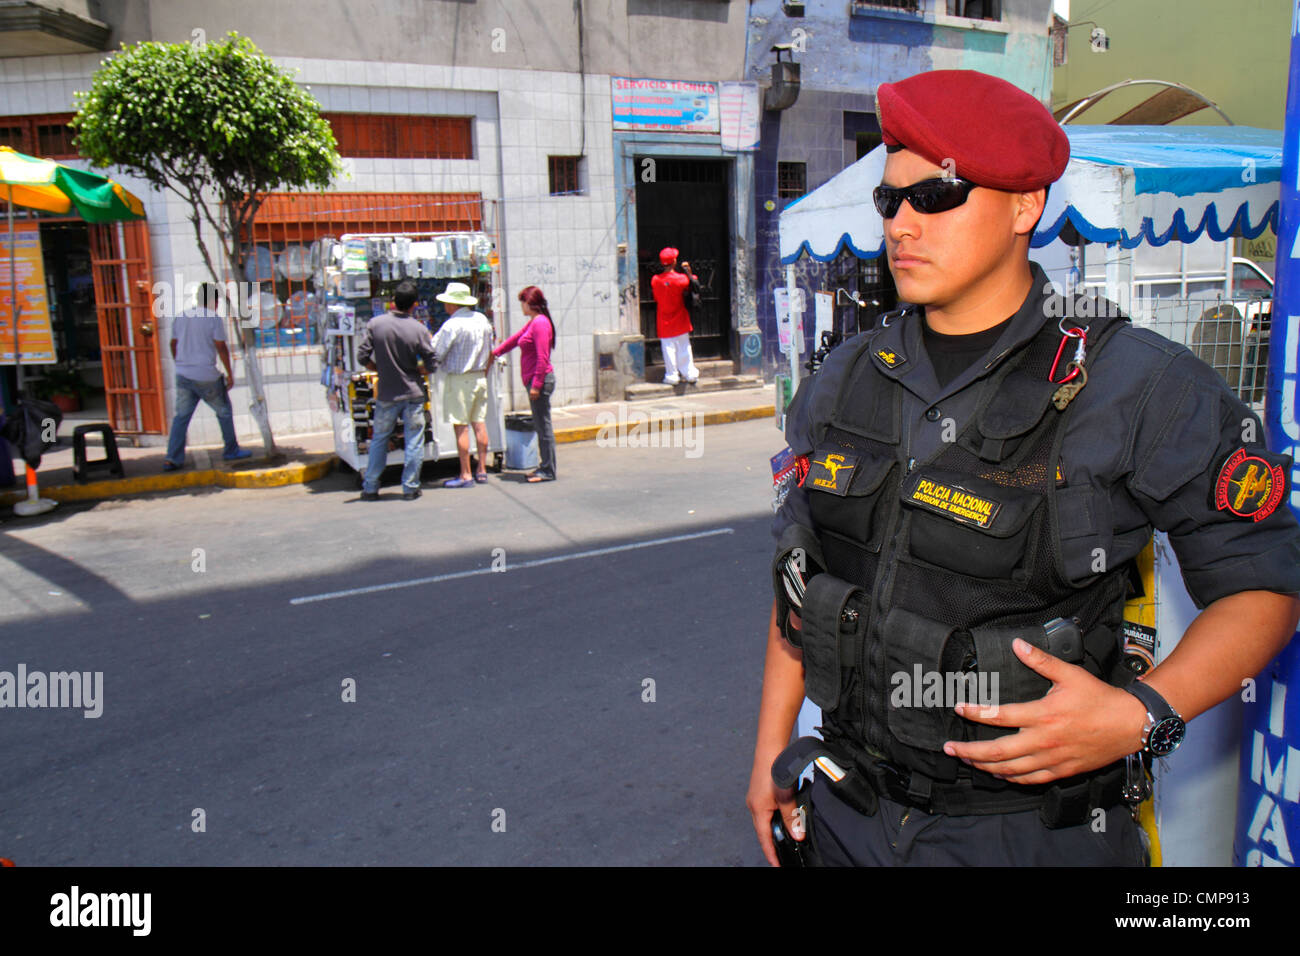 Lima Peru,Surquillo,Mercado de Surquillo,street scene,commercial district,Hispanic ethnic national guard,Policia Nacional,armed policeman,uniform,bere Stock Photo